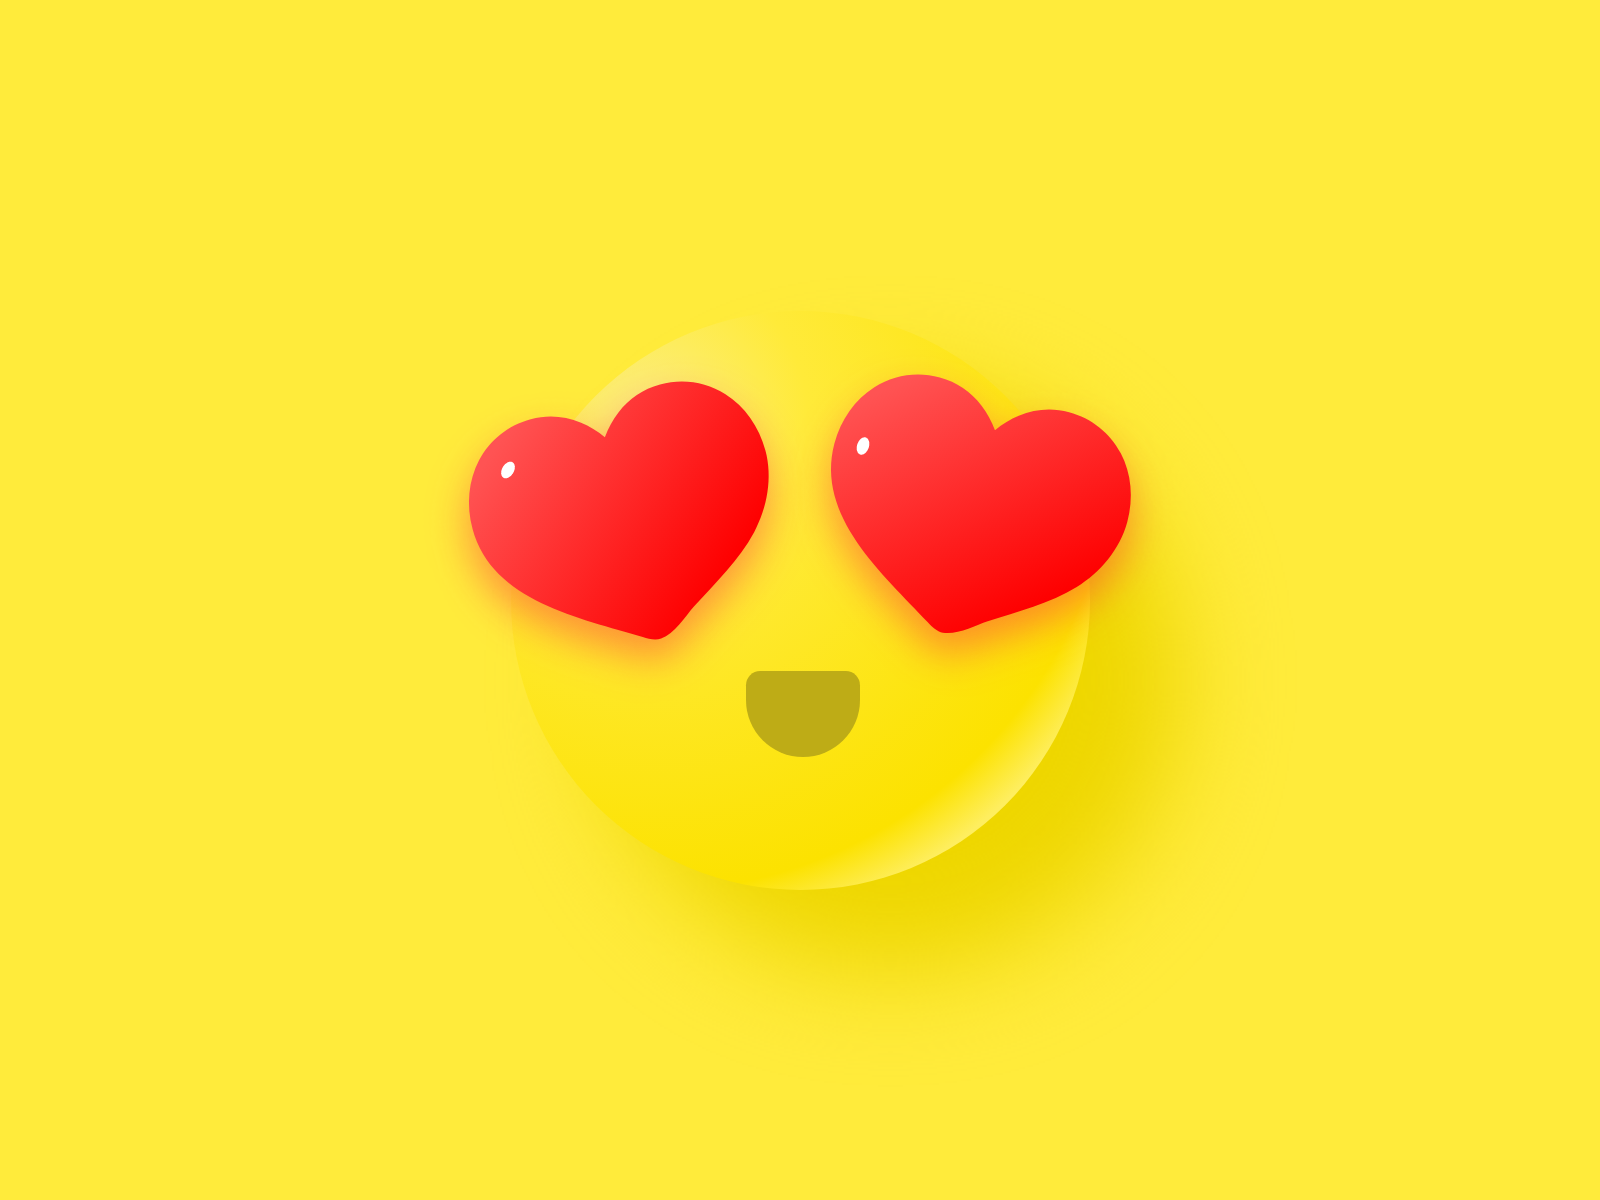 emoji heart eyes background